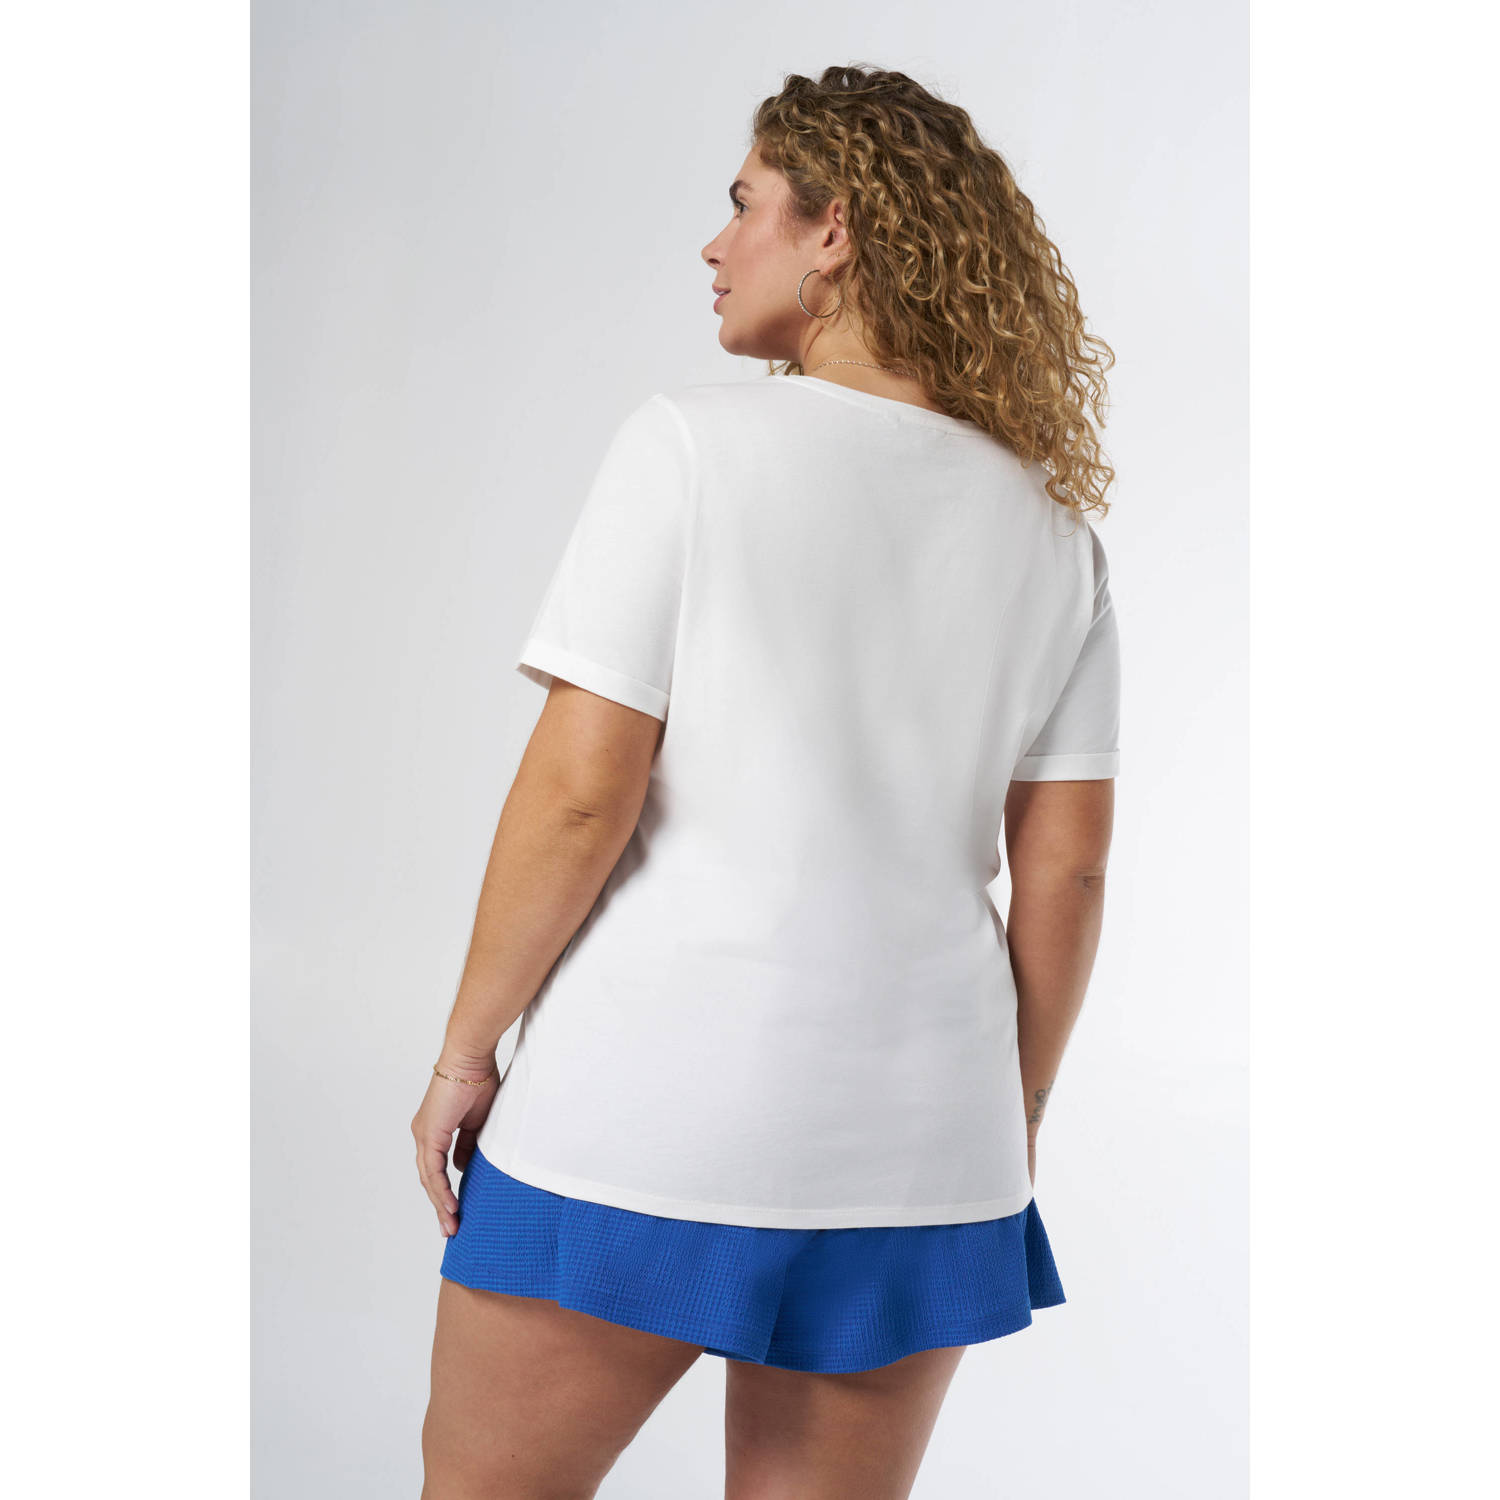 MS Mode T-shirt met printopdruk wit blauw